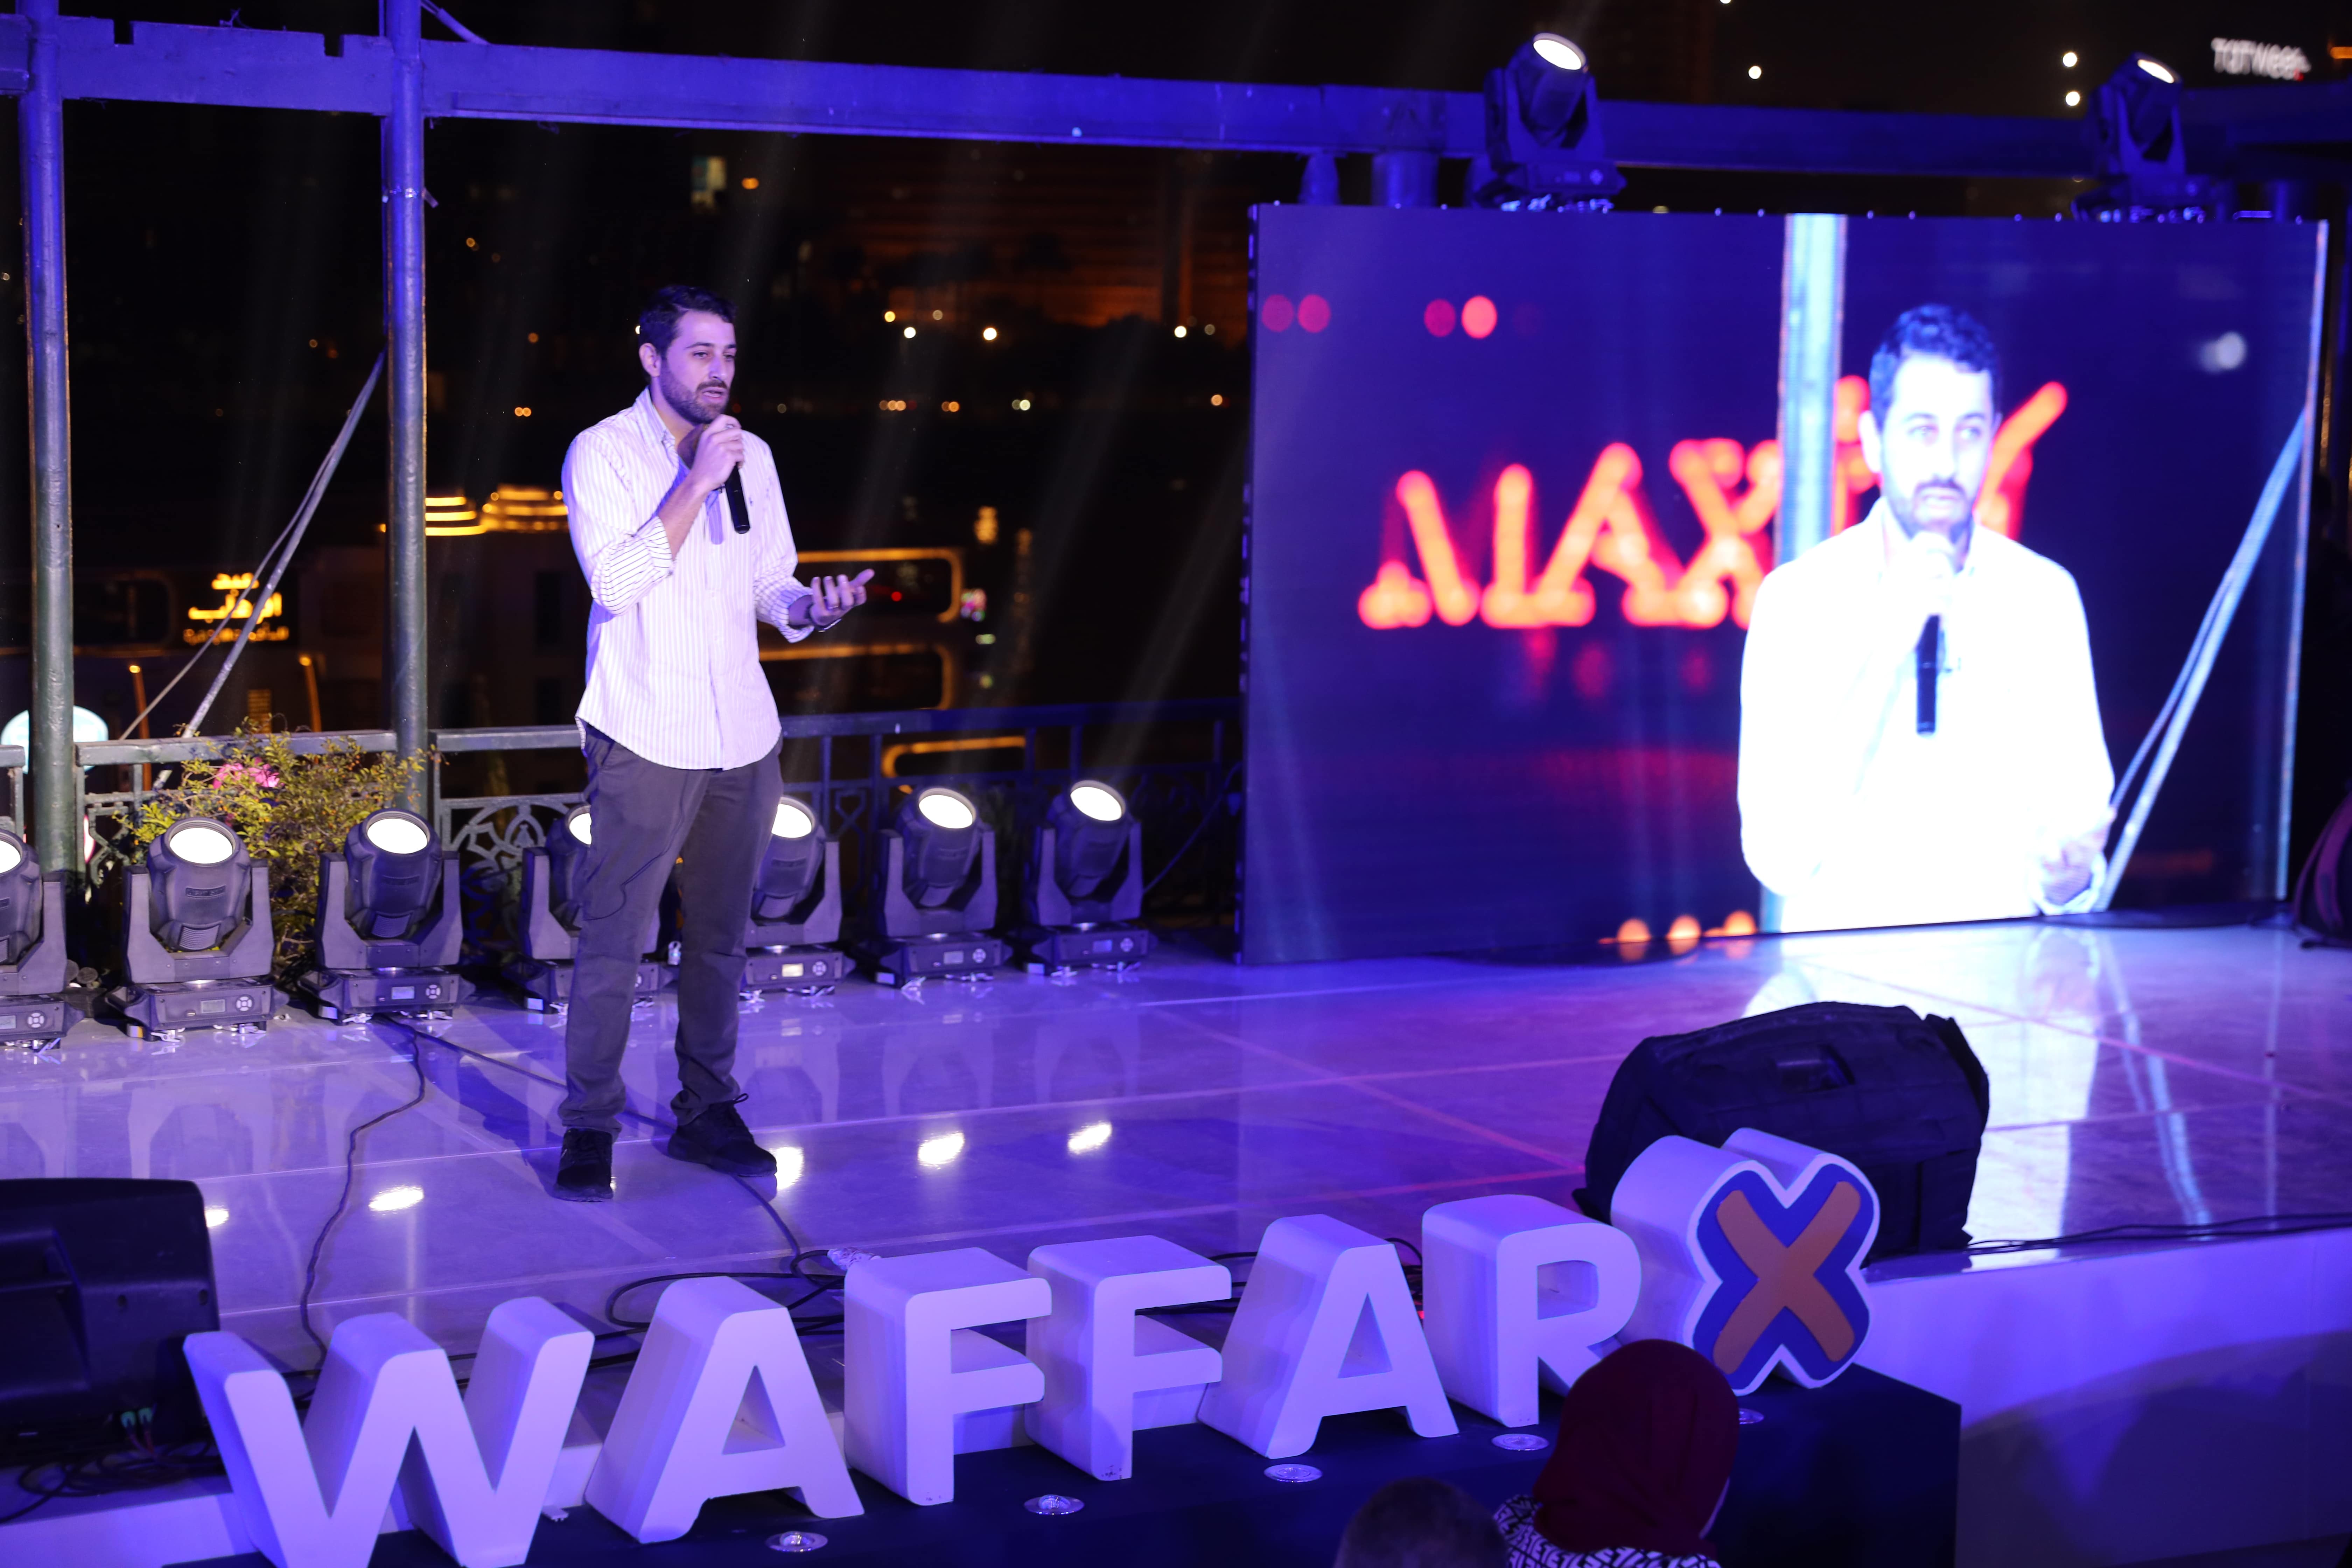 Ezz Fayek CEO of WaffarX